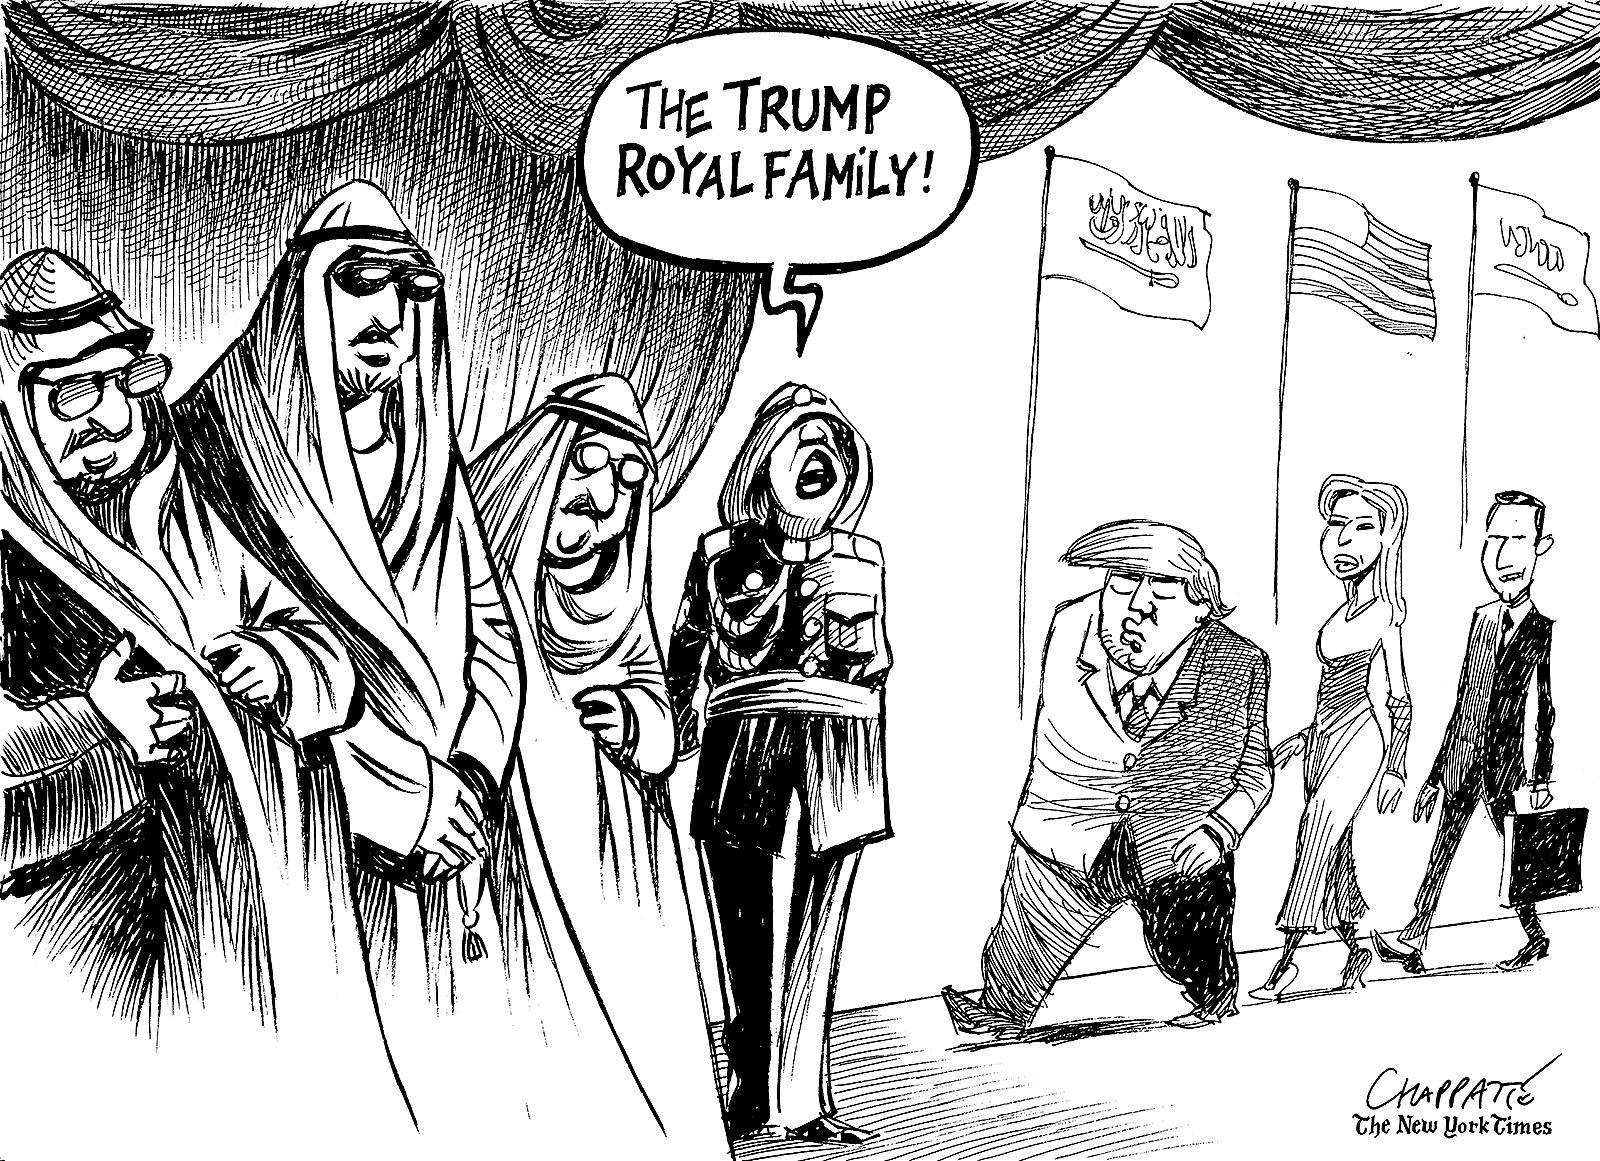 The Trumps abroad